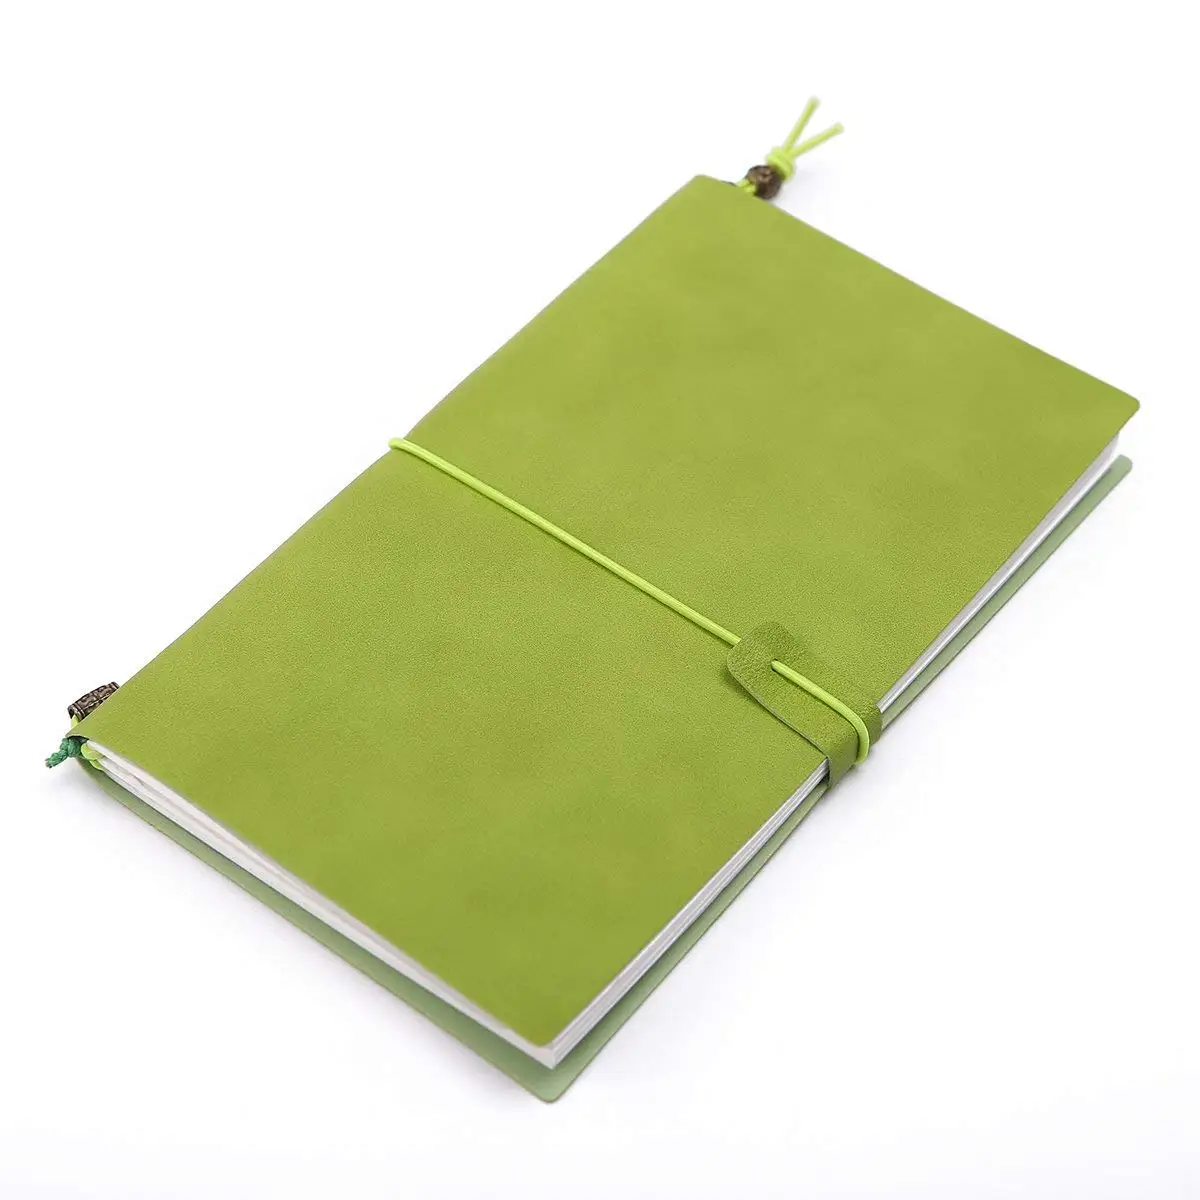 notebook paper